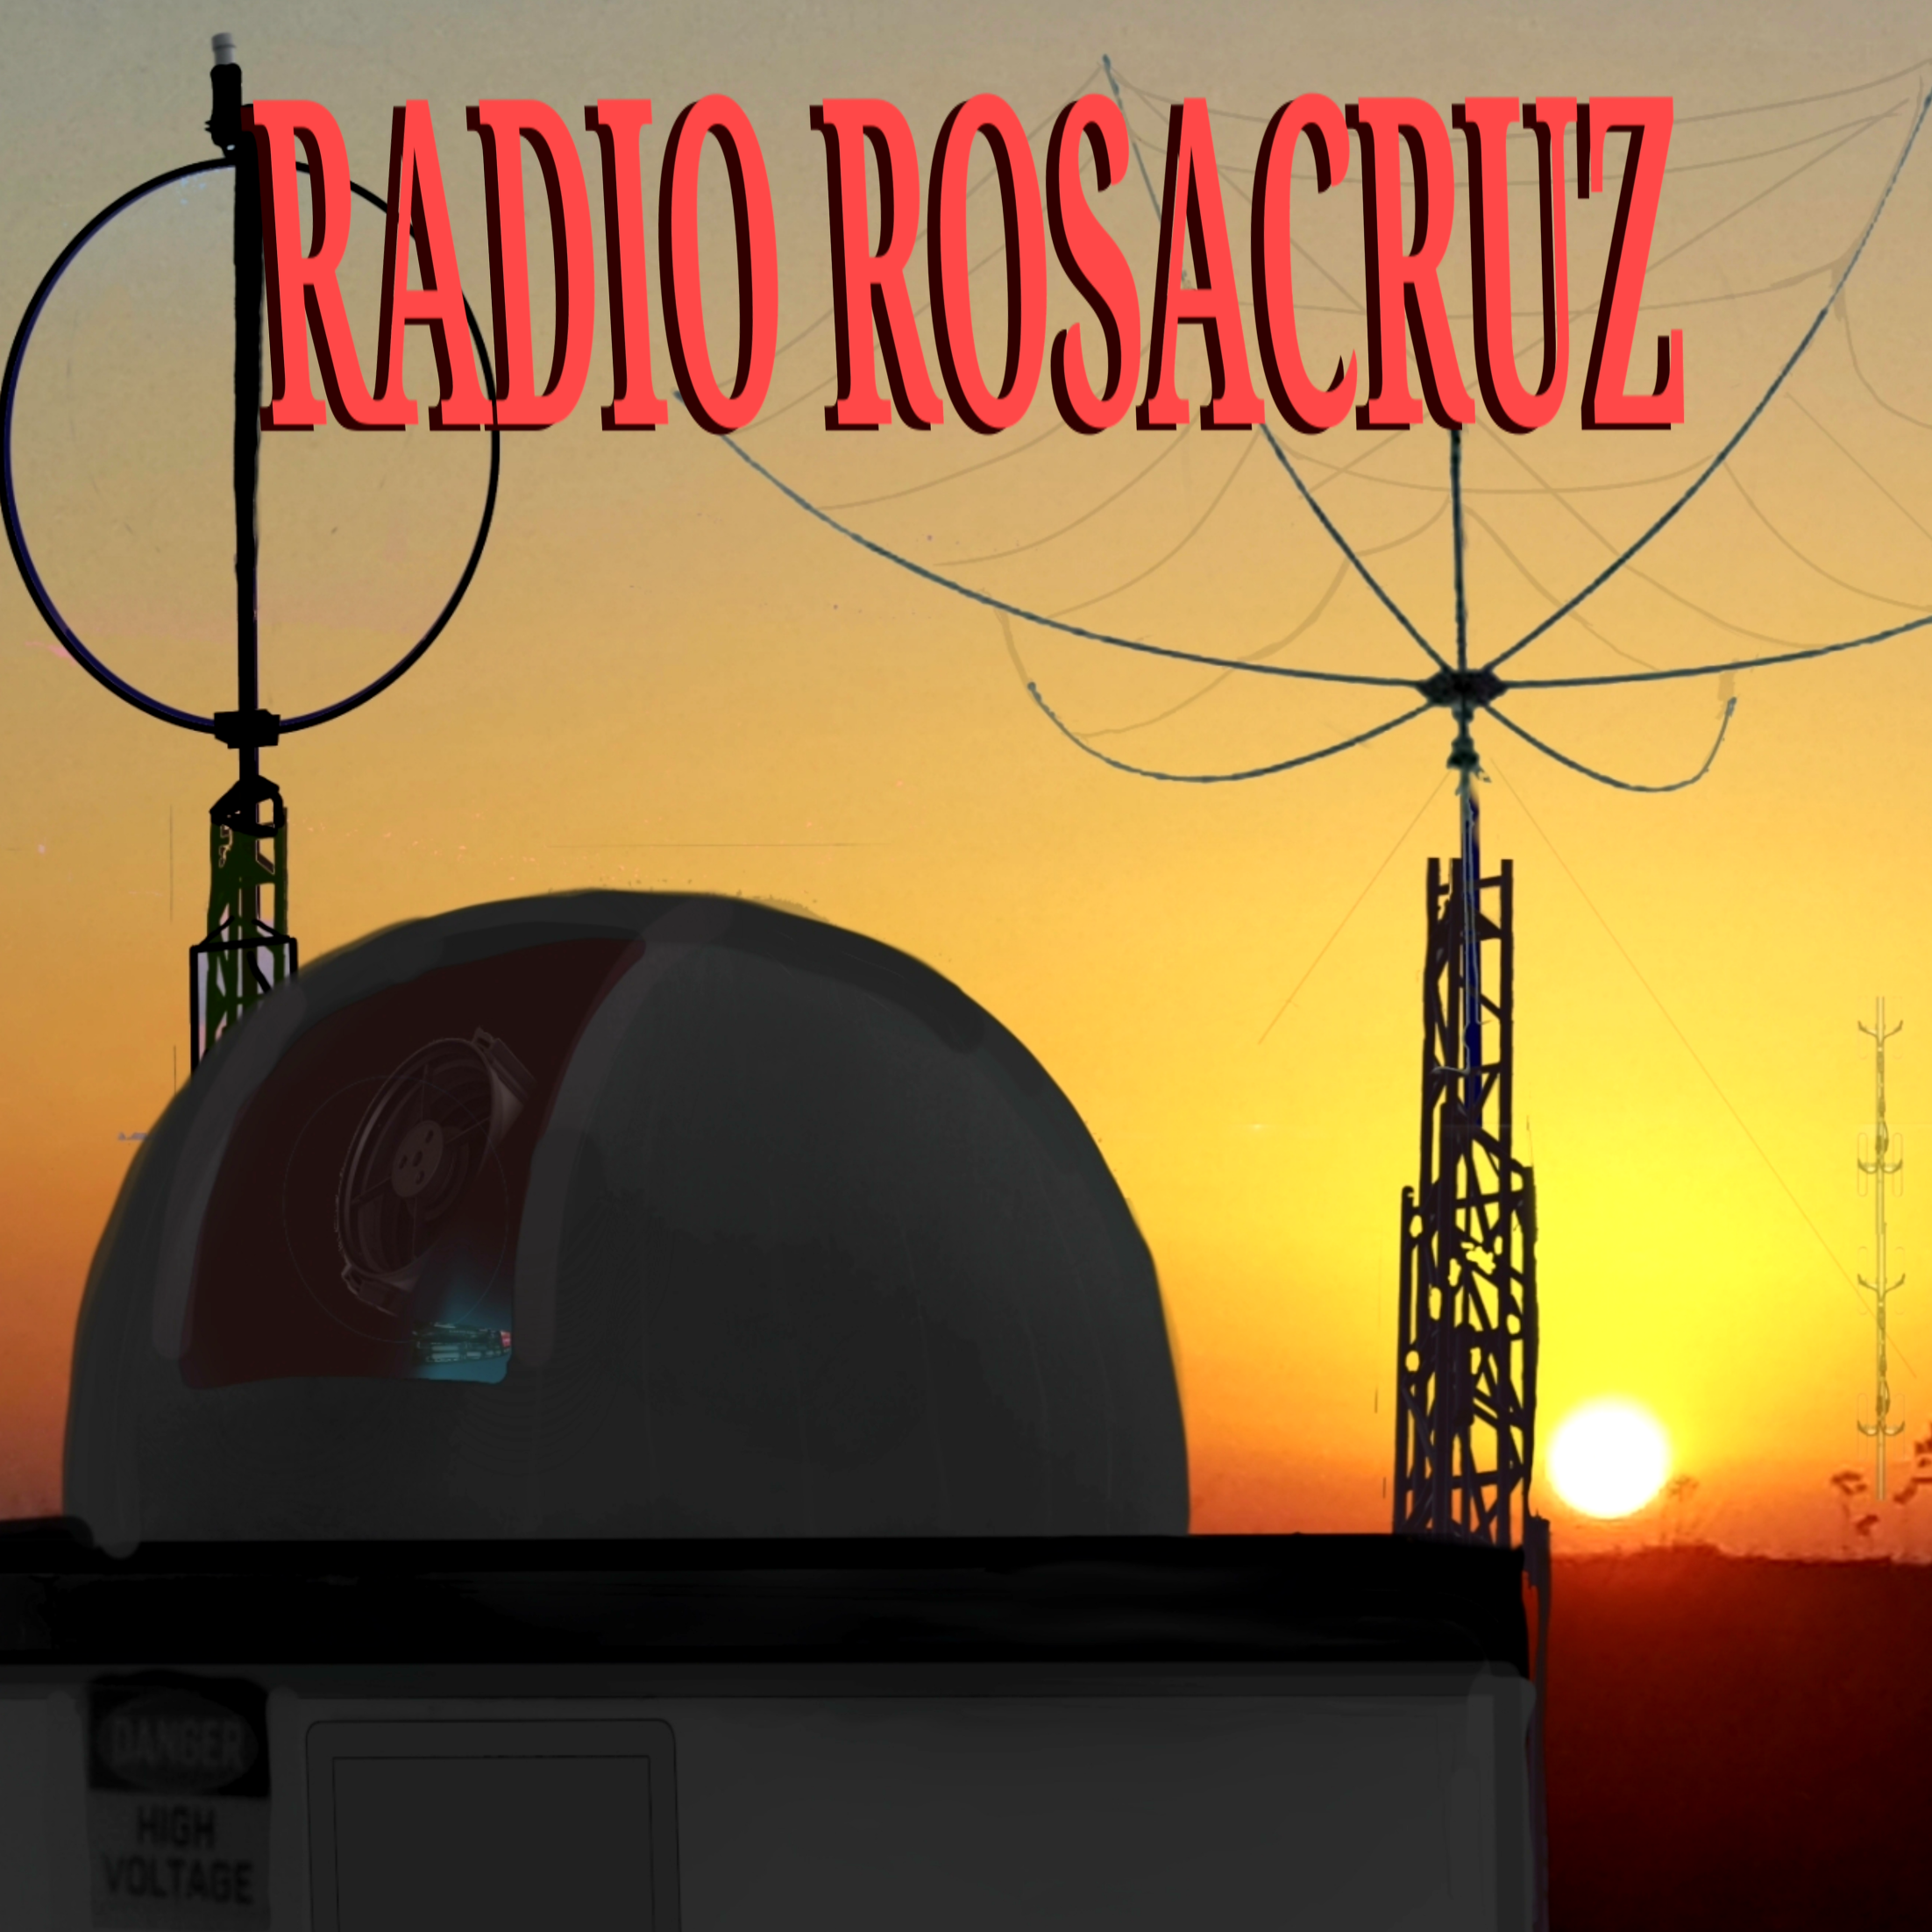 Radio Rosacruz